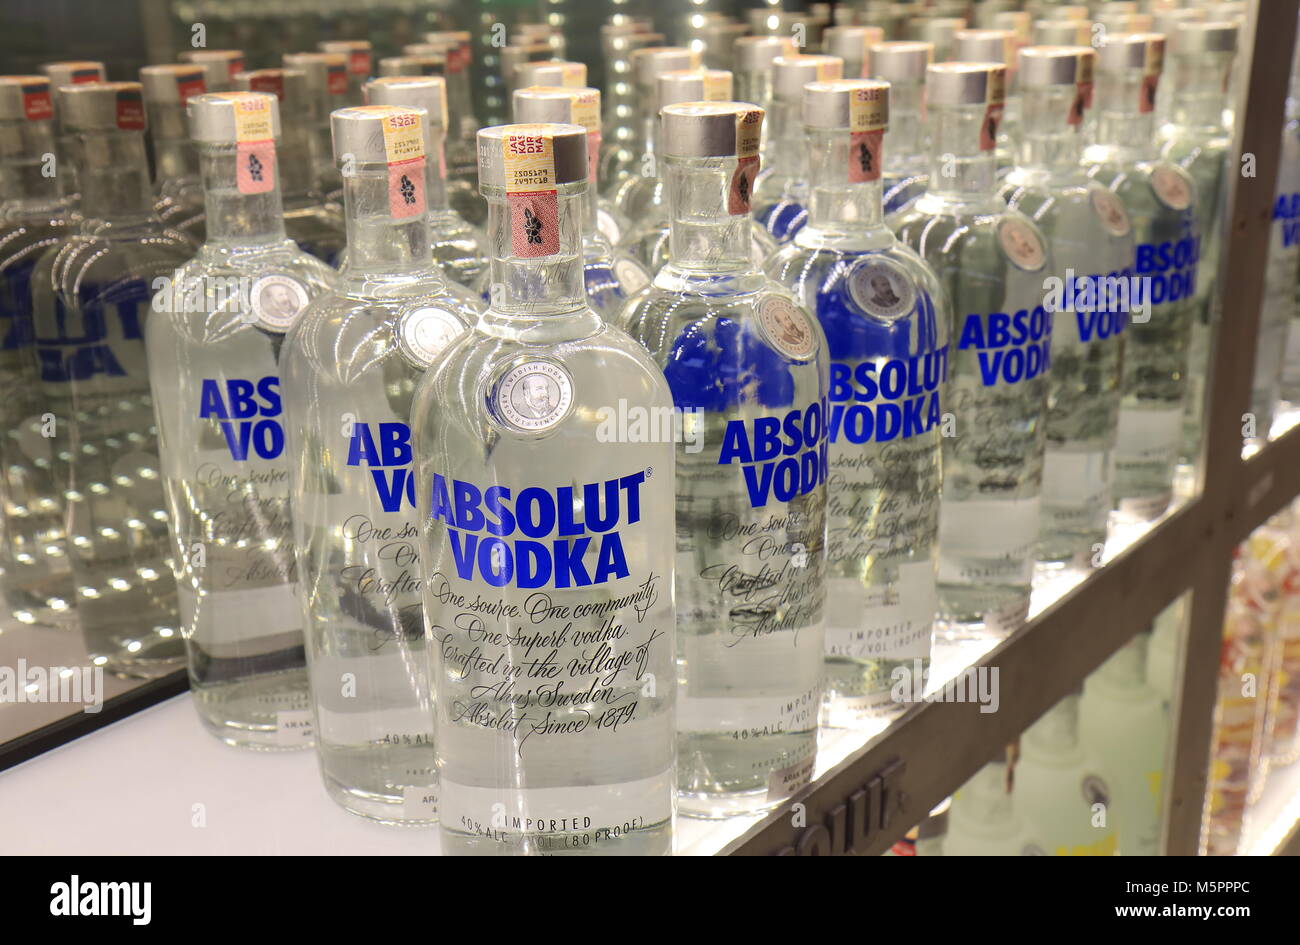 Duty free shop displays Absolut Vodka bottles at Kuala Lumpur International Airport in Malaysia Stock Photo